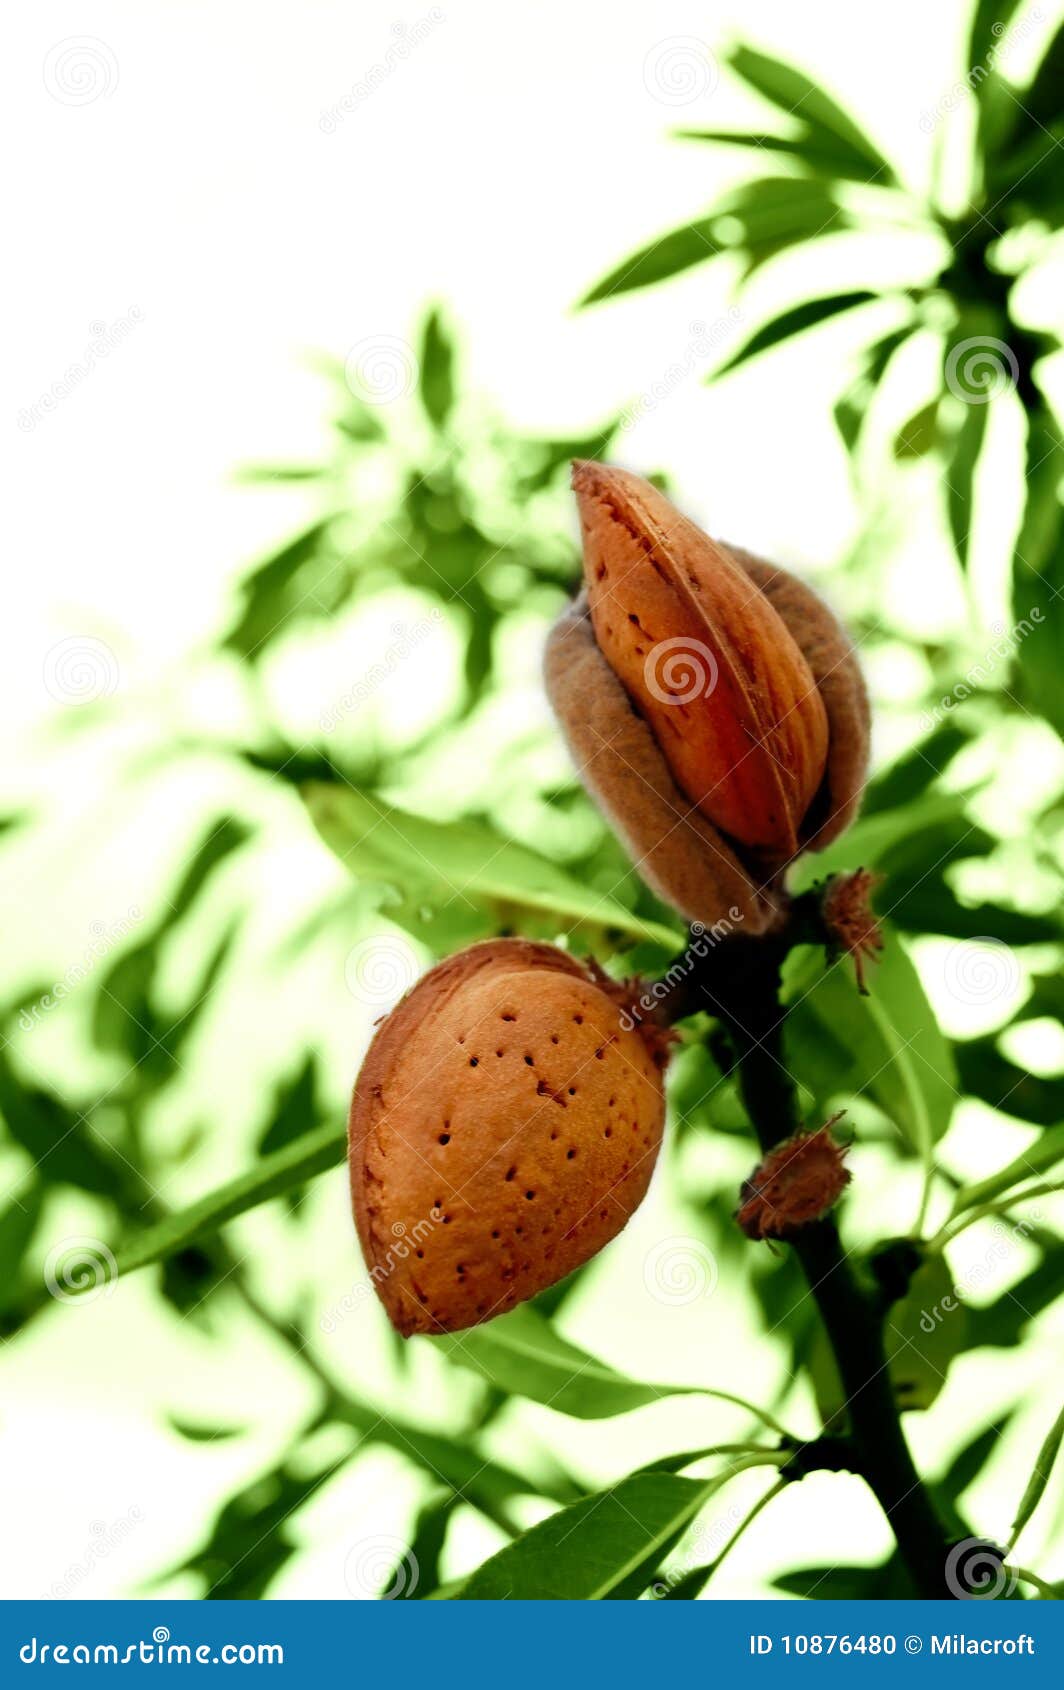 Almond Tree With Ripe Fruits Stock Photo Image of grow